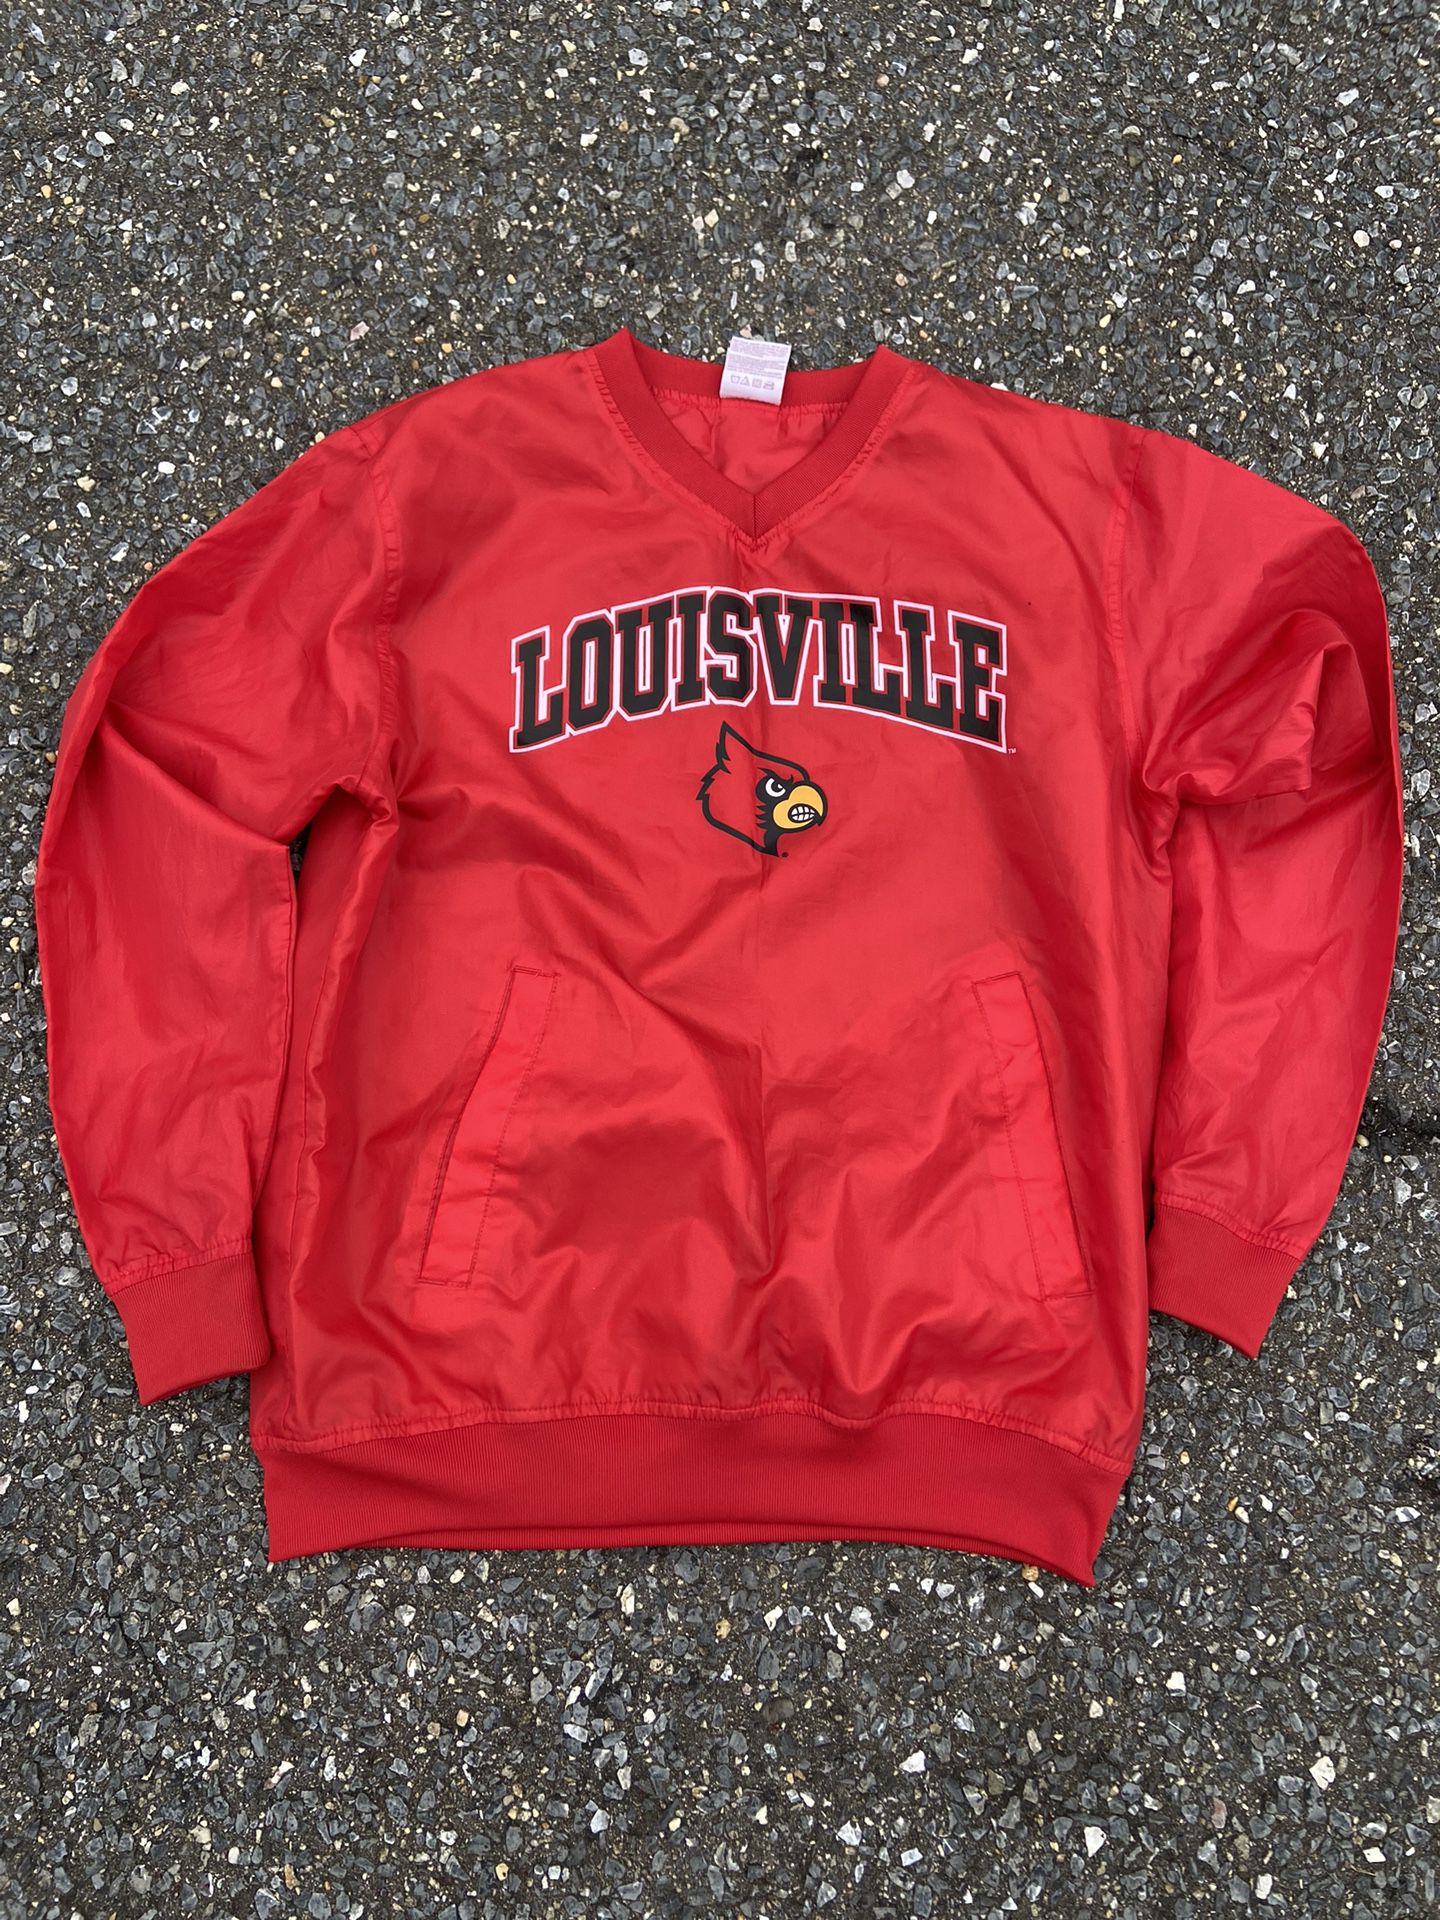 Vintage Rare Louisville Windbreaker Sweatshirt 